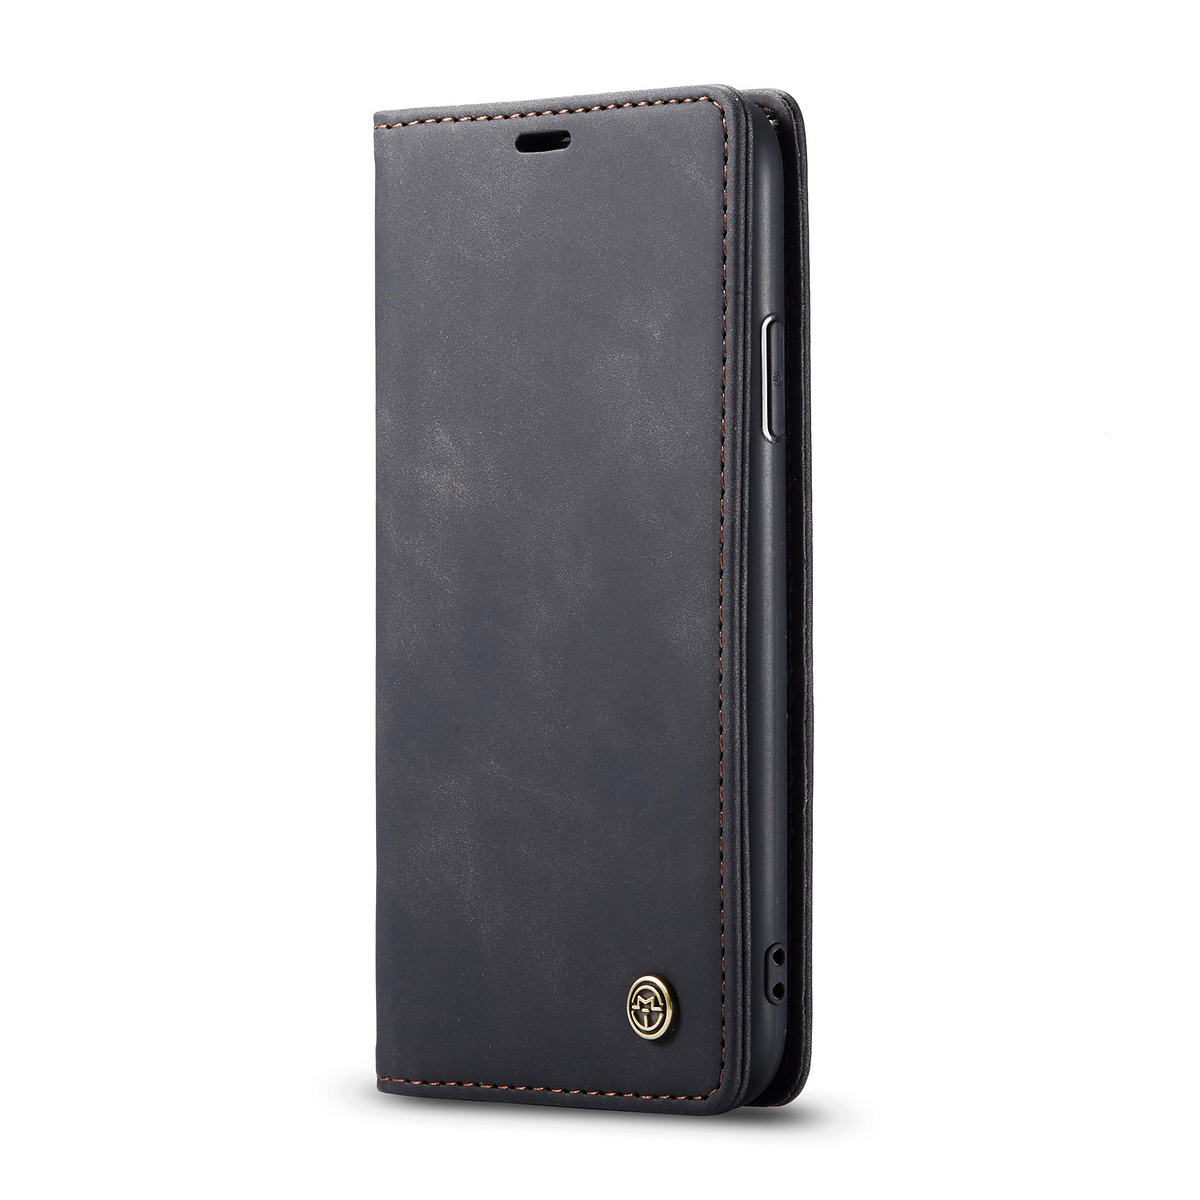 CaseMe plånboksfodral, iPhone 11, svart